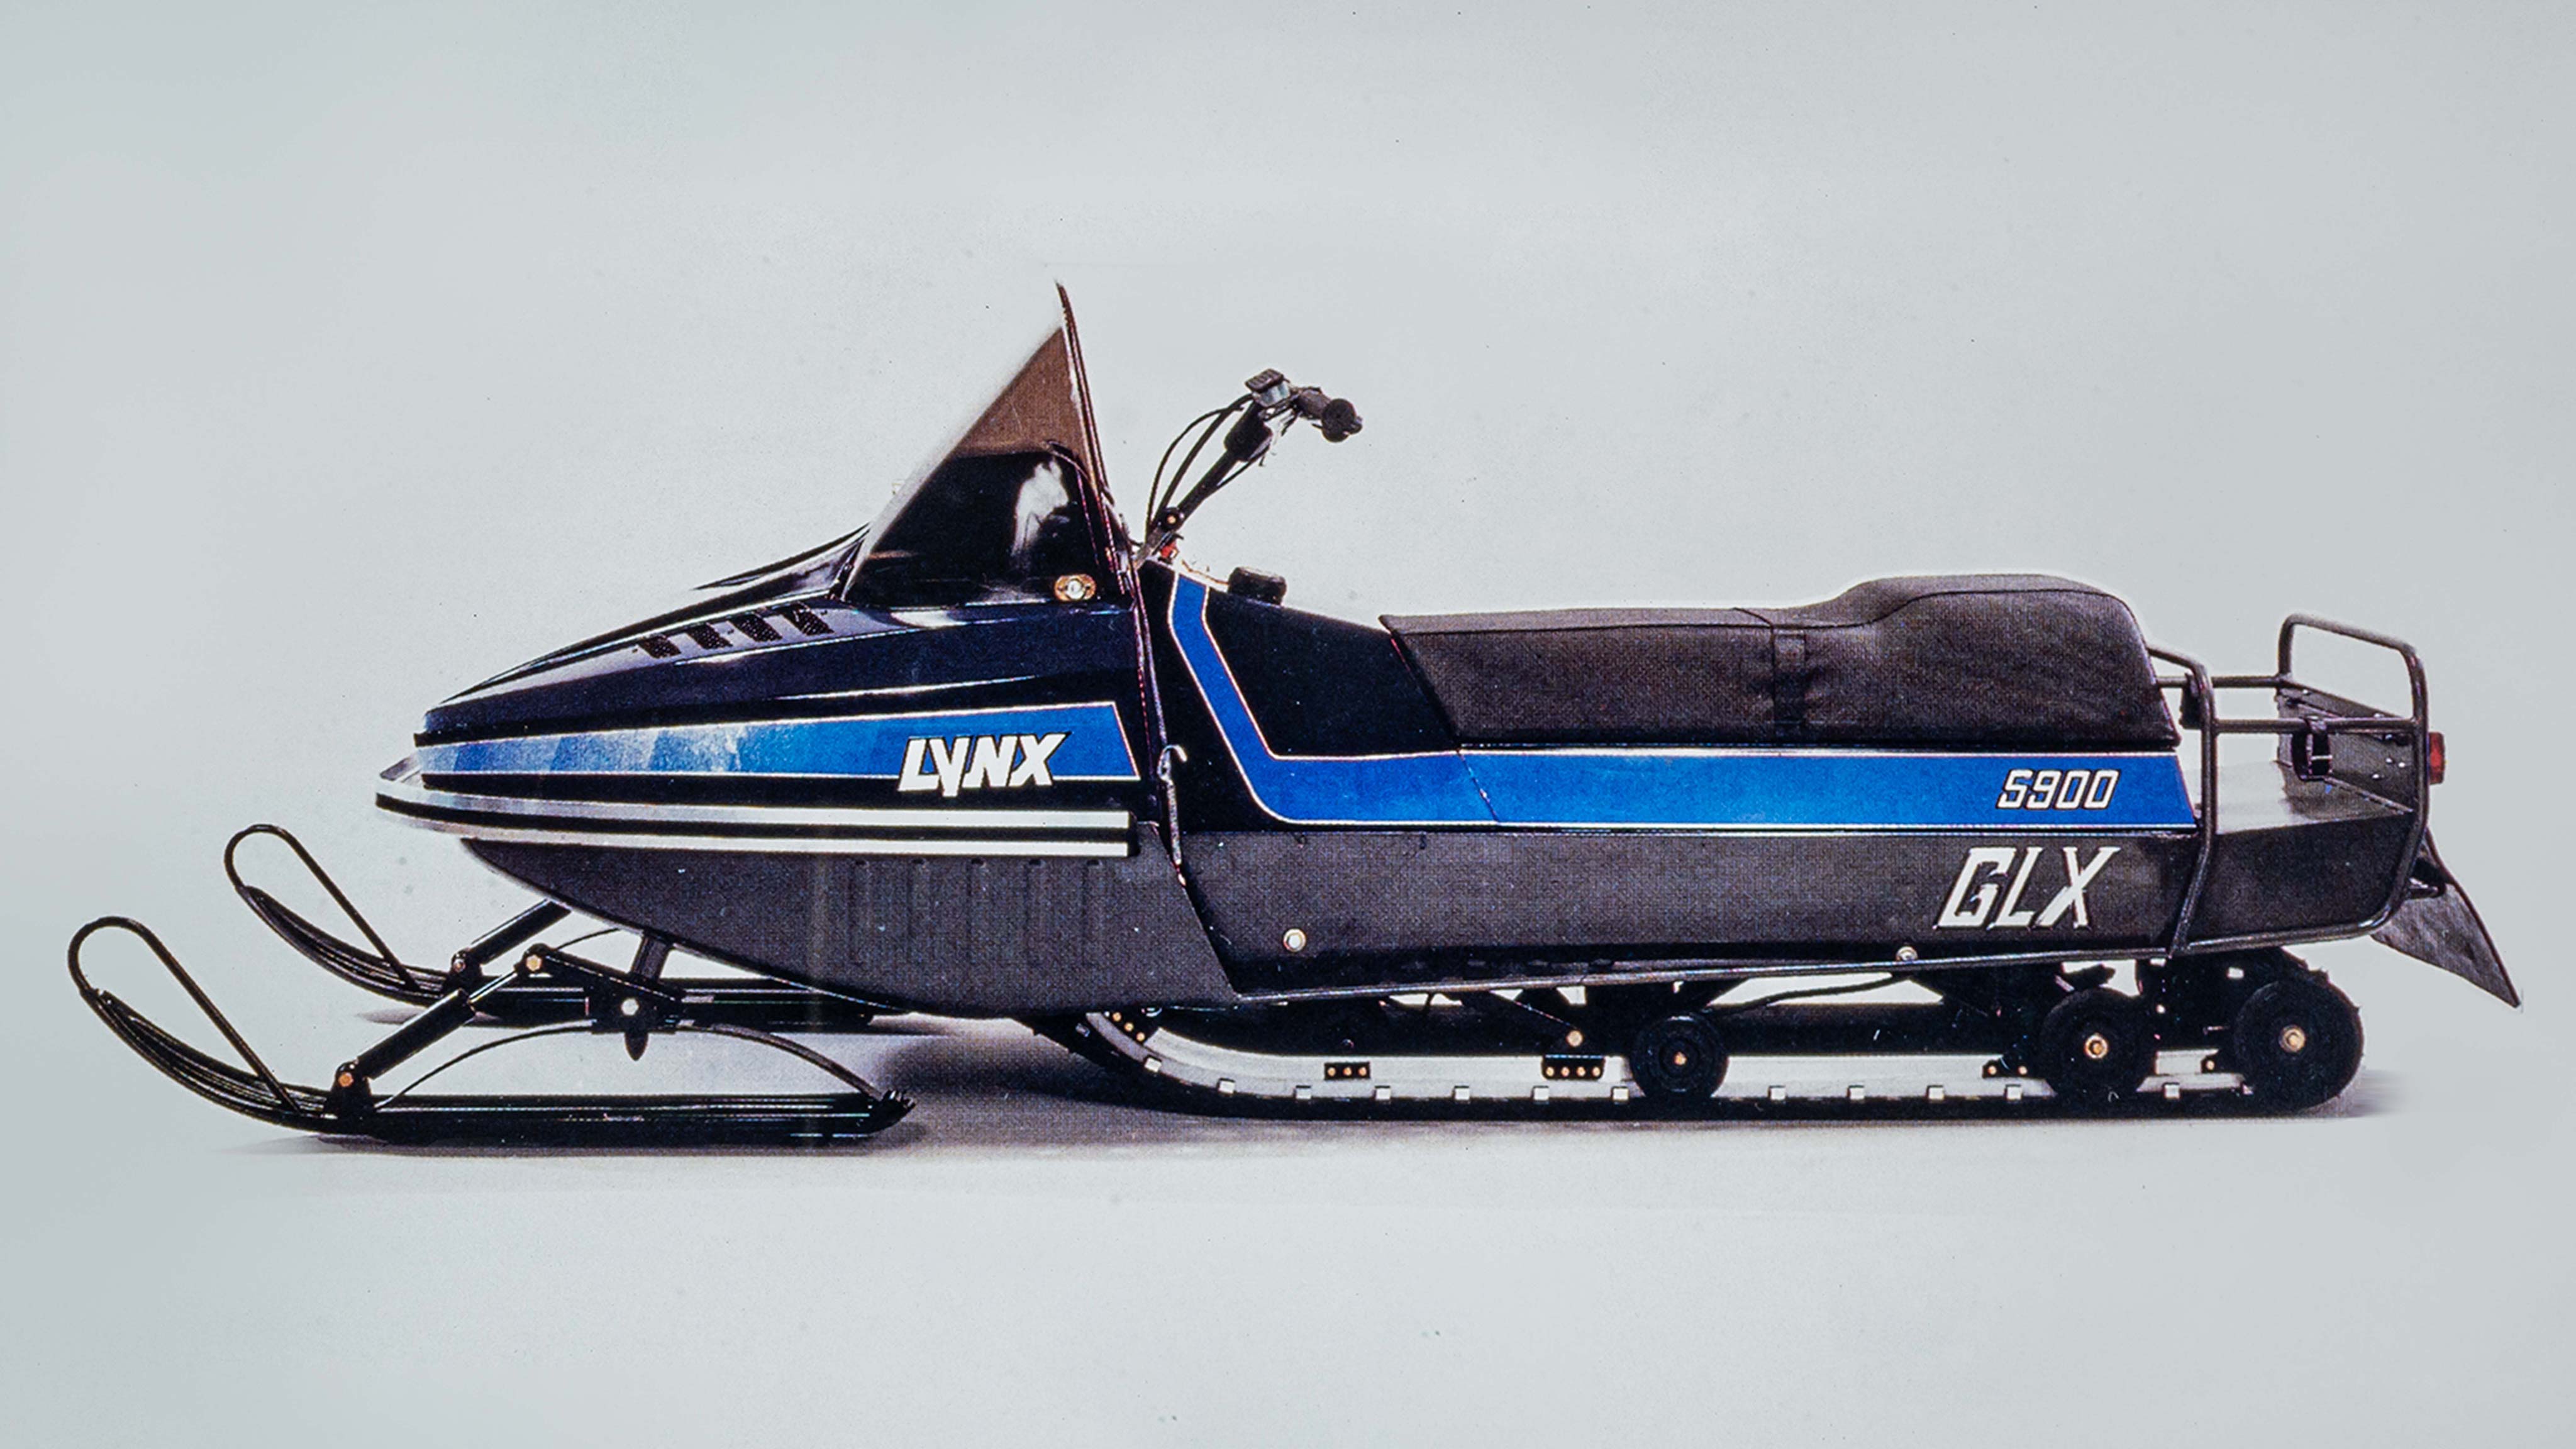 Old Lynx GLX 5900 1983 snowmobile in studio